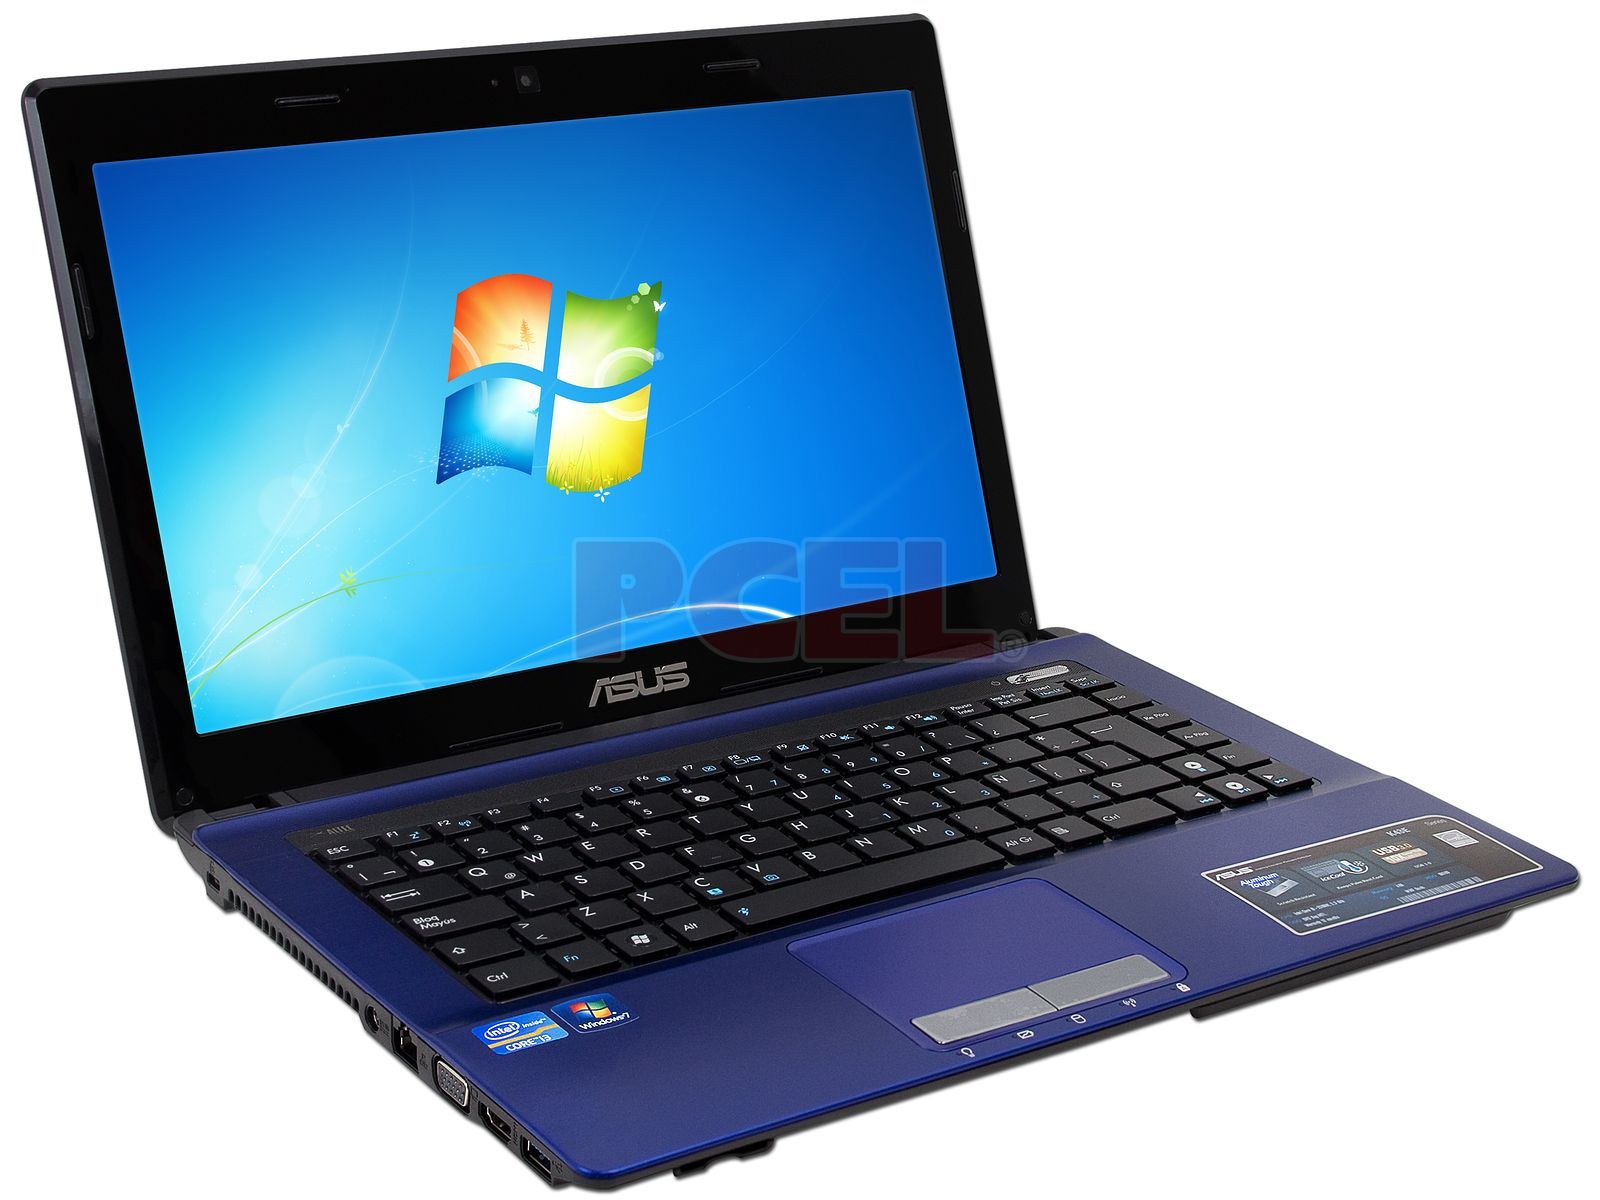 Calm upside down systematic Laptop Asus K43E-MS1: Procesador Intel Core i3-2350M (2.3 GHz), Memoria de  4 GB DDR3, Disco Duro de 500 GB, Pantalla LED de 14", Video Intel HD  Graphics 3000, DVD±R/RW DL, Red 802.11b/g/n,